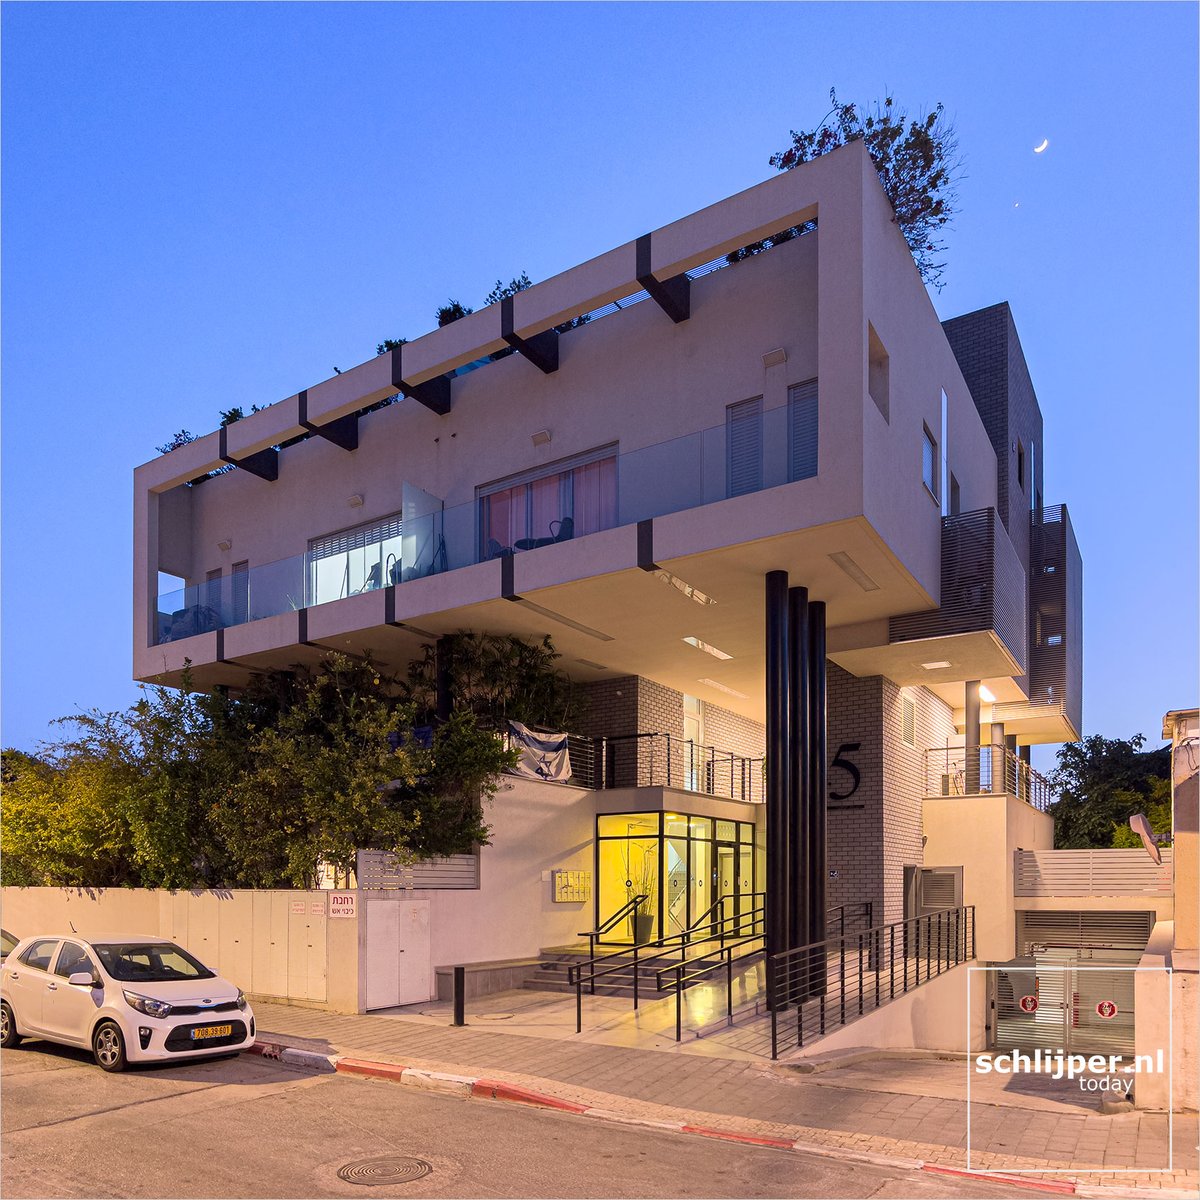 Also this is Shapira

Where: Tel Aviv, Ba'al HaAkeda
When: 23 05 2023 20:03 
What: #architectureTLV